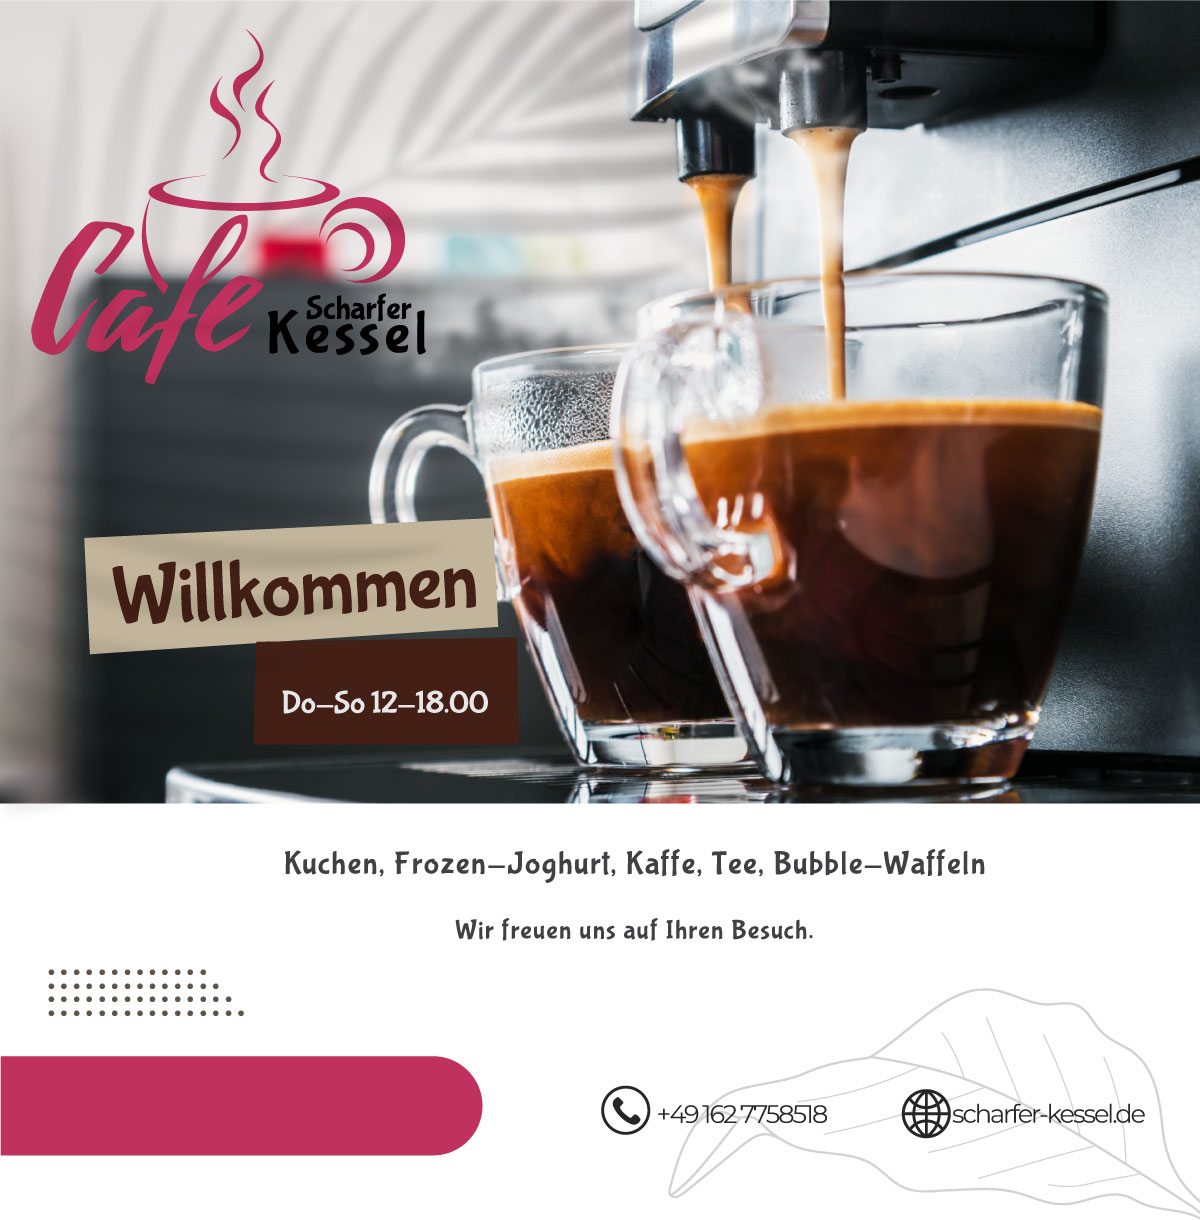 coffee_ii Restaurant & Pension "Scharfer Kessel" | Über uns